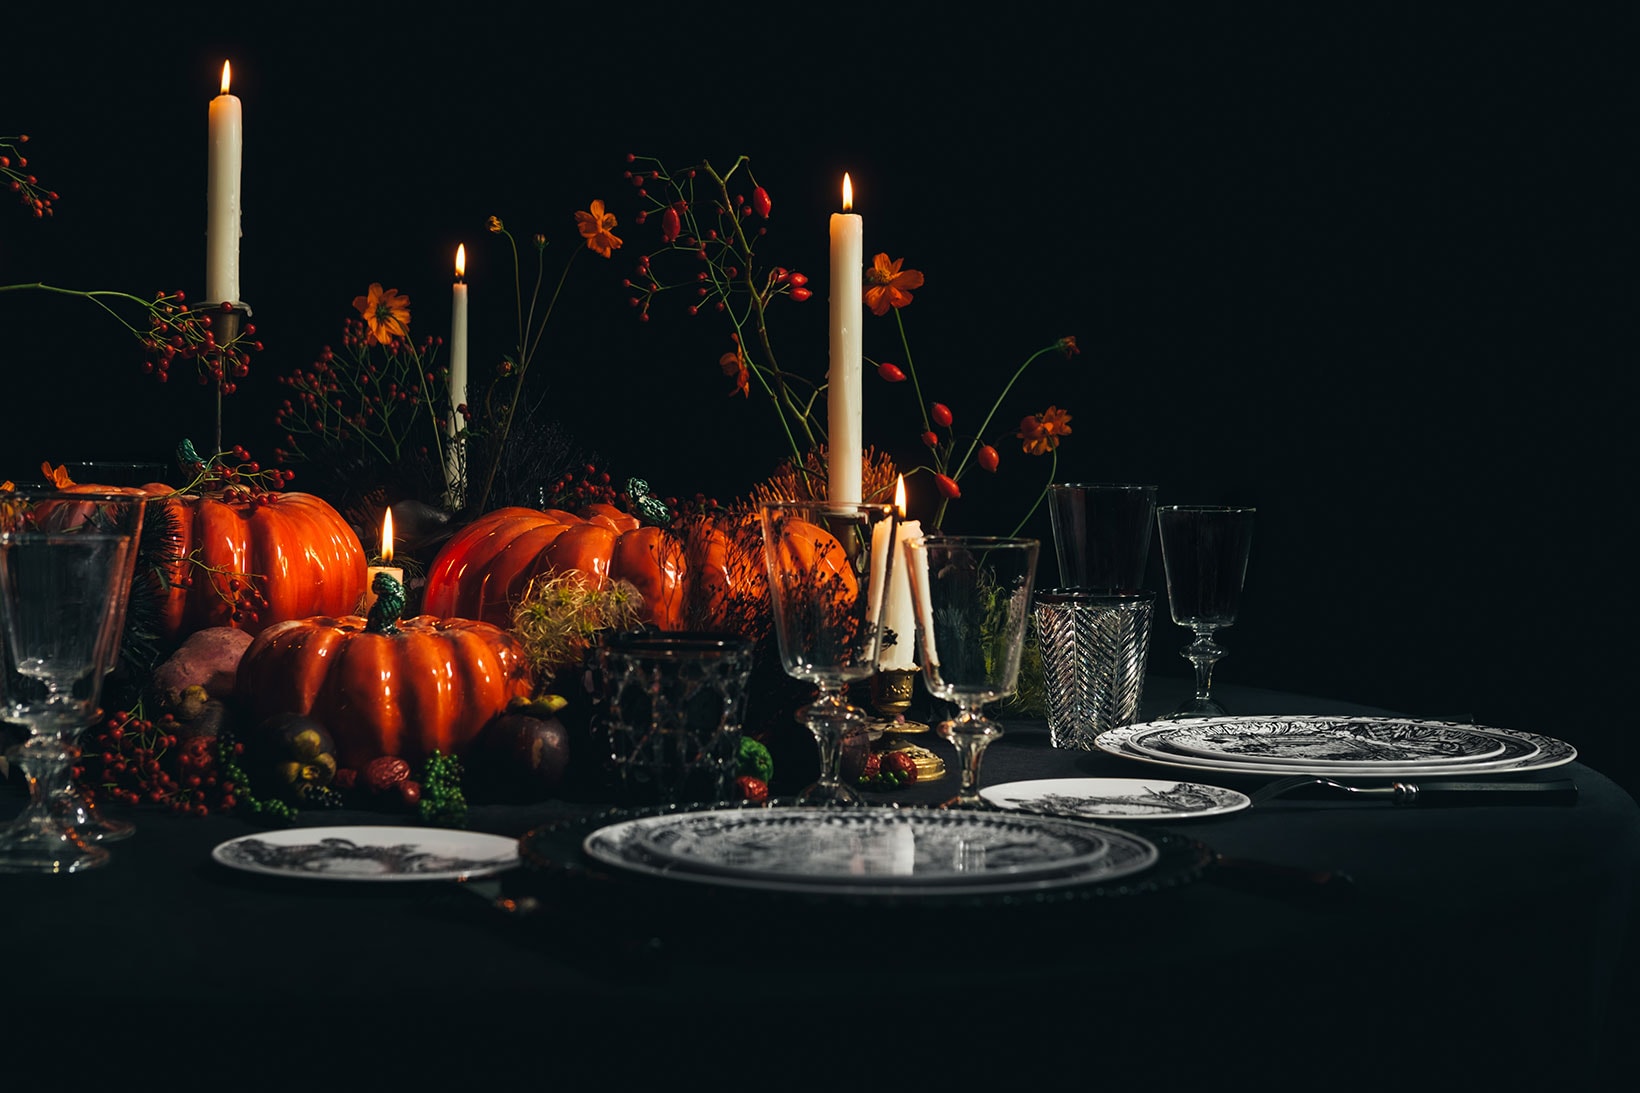 Dior Maison Halloween Table Homeware Decor Ceramic Plates Pumpkins Candles